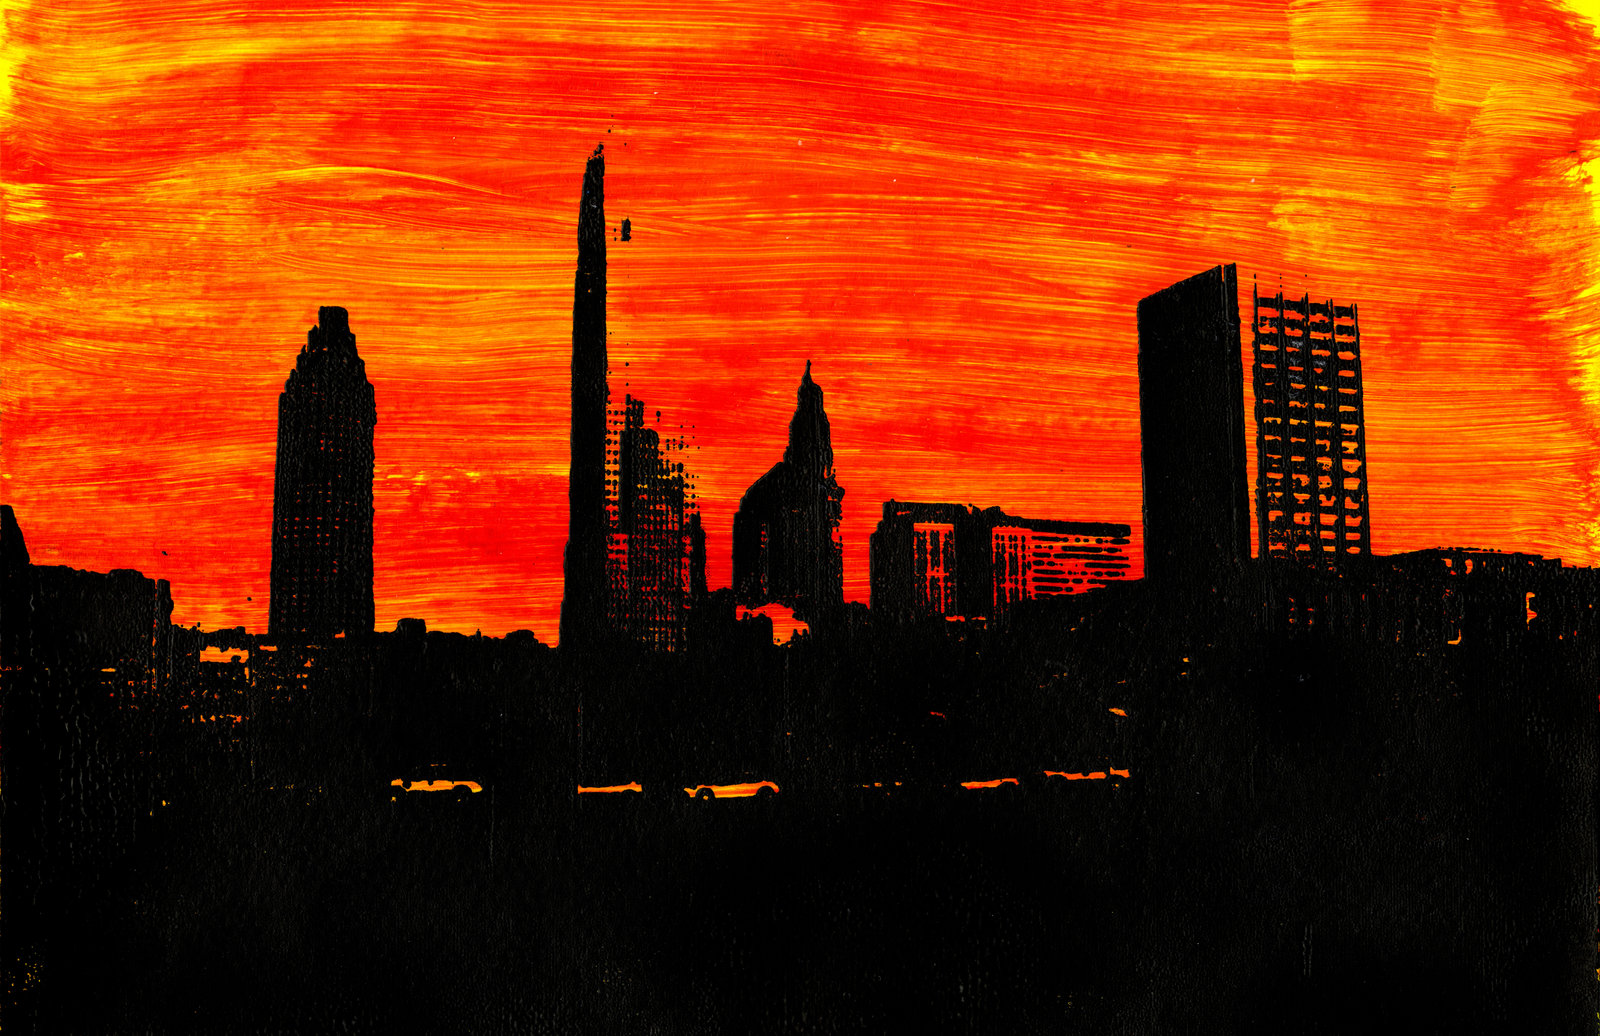 Cleveland Skyline Print By Justmardesign